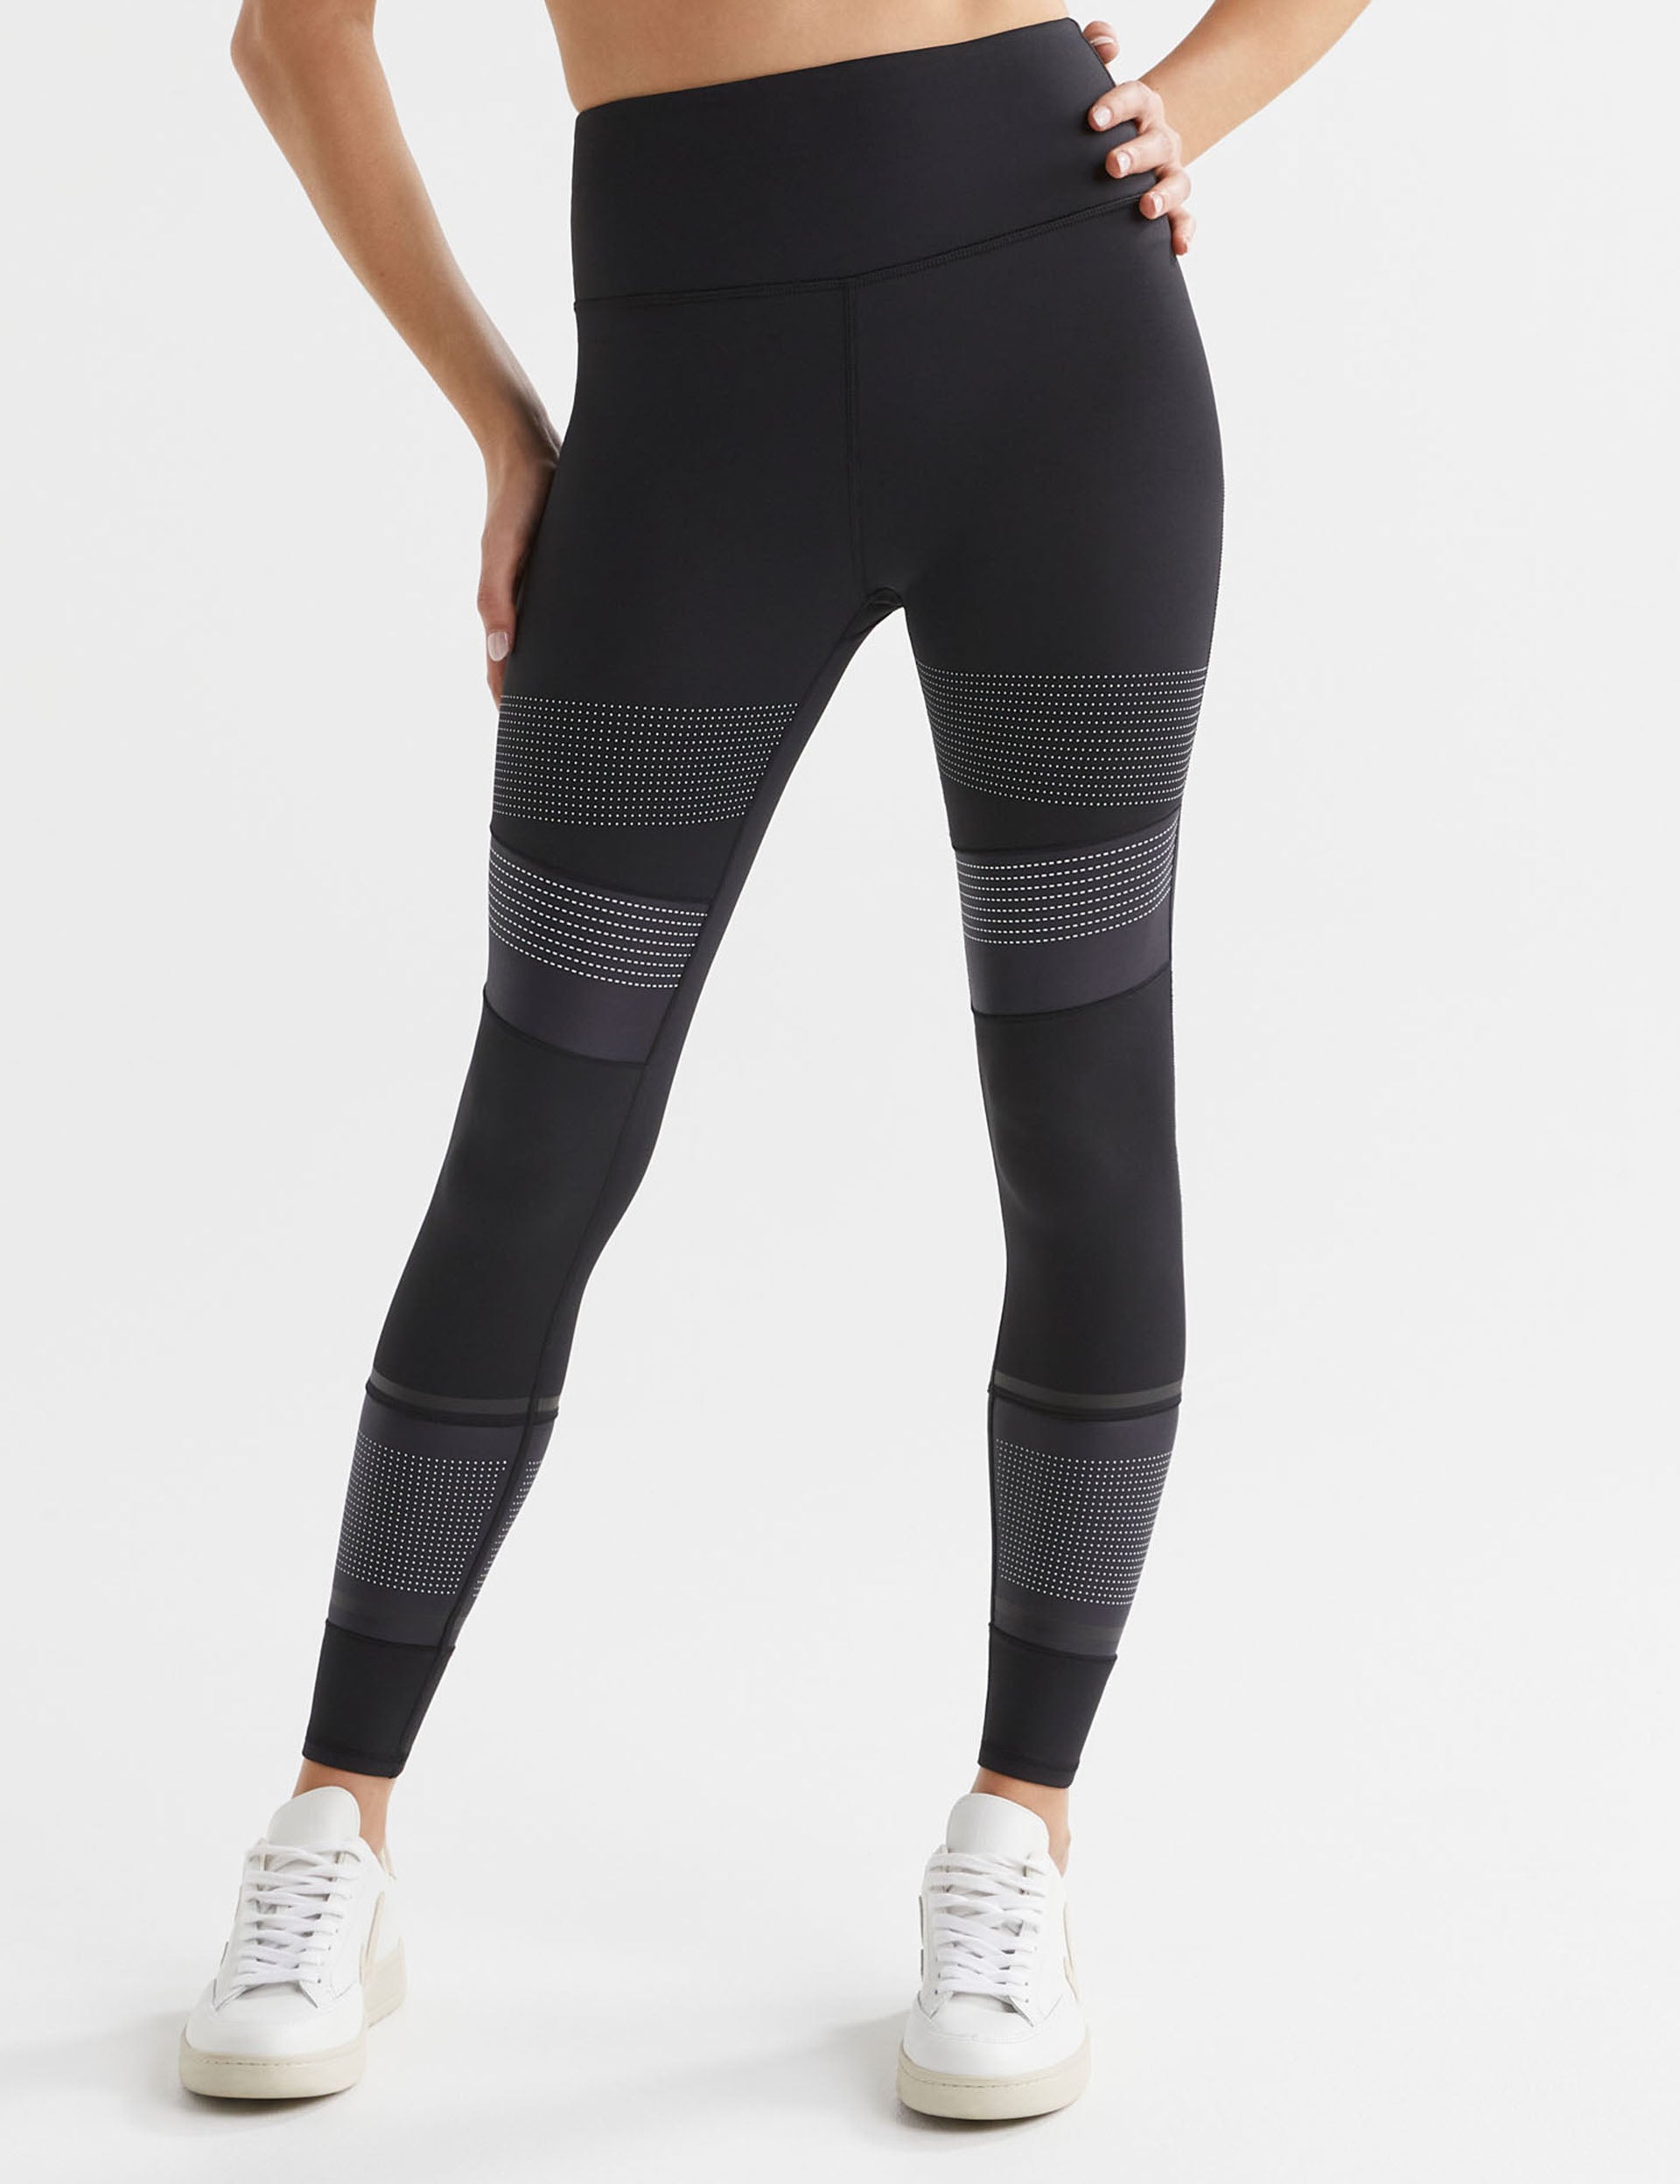 Women's Activewear Criss Cross Lace-up Mesh Side Workout Leggings, Black |  eBay